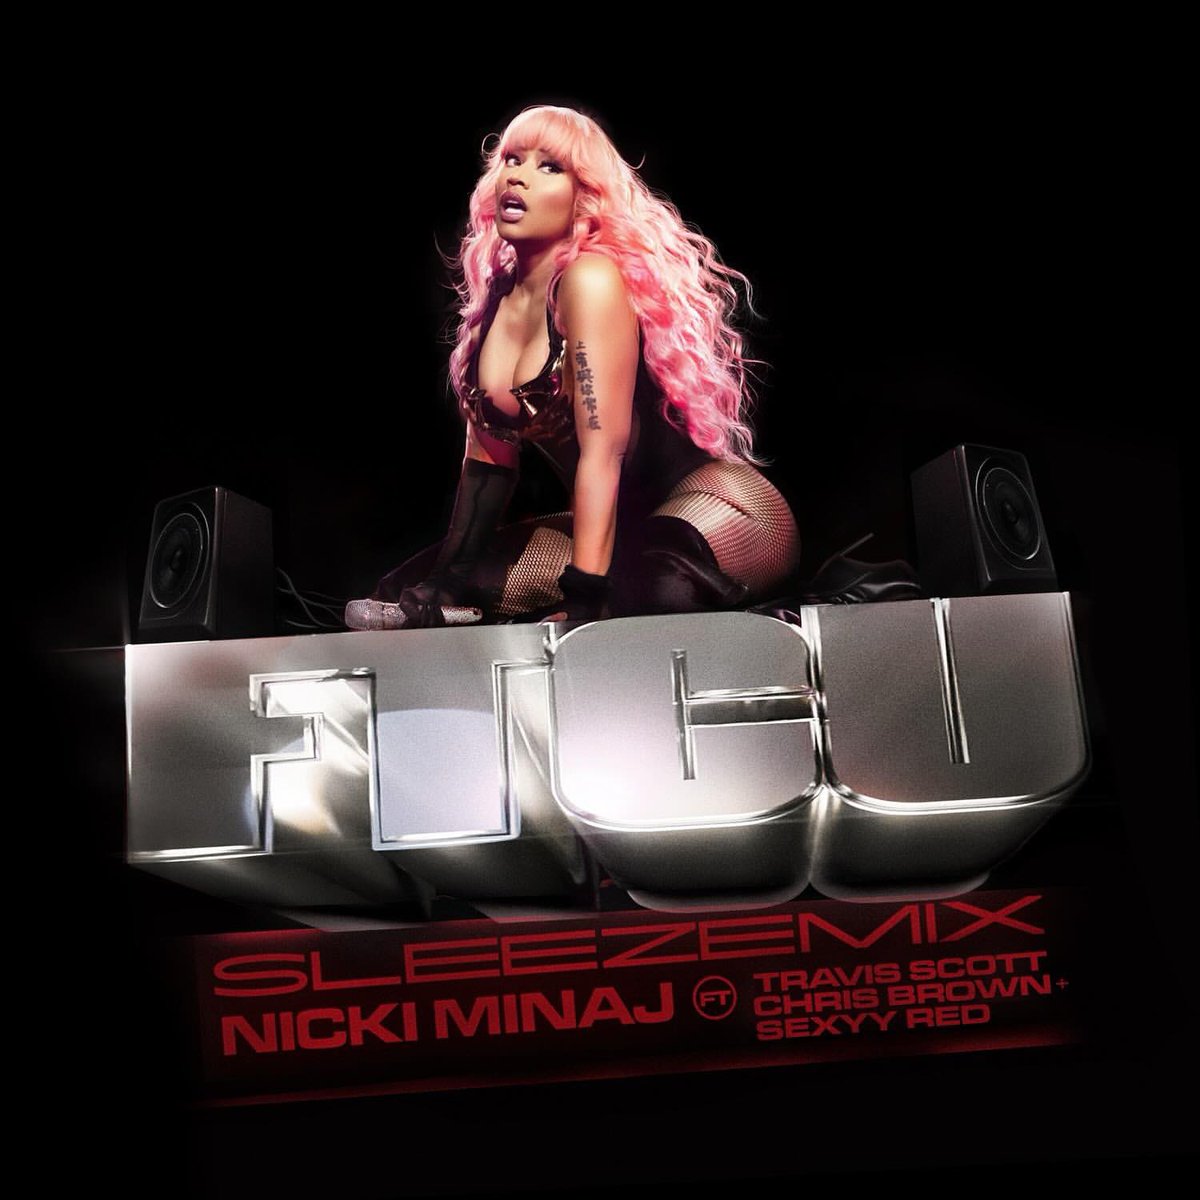 Nicki Minaj, Travis Scott, Chris Brown & Sexyy Red “FTCU” Sleeze Mix Midnight!